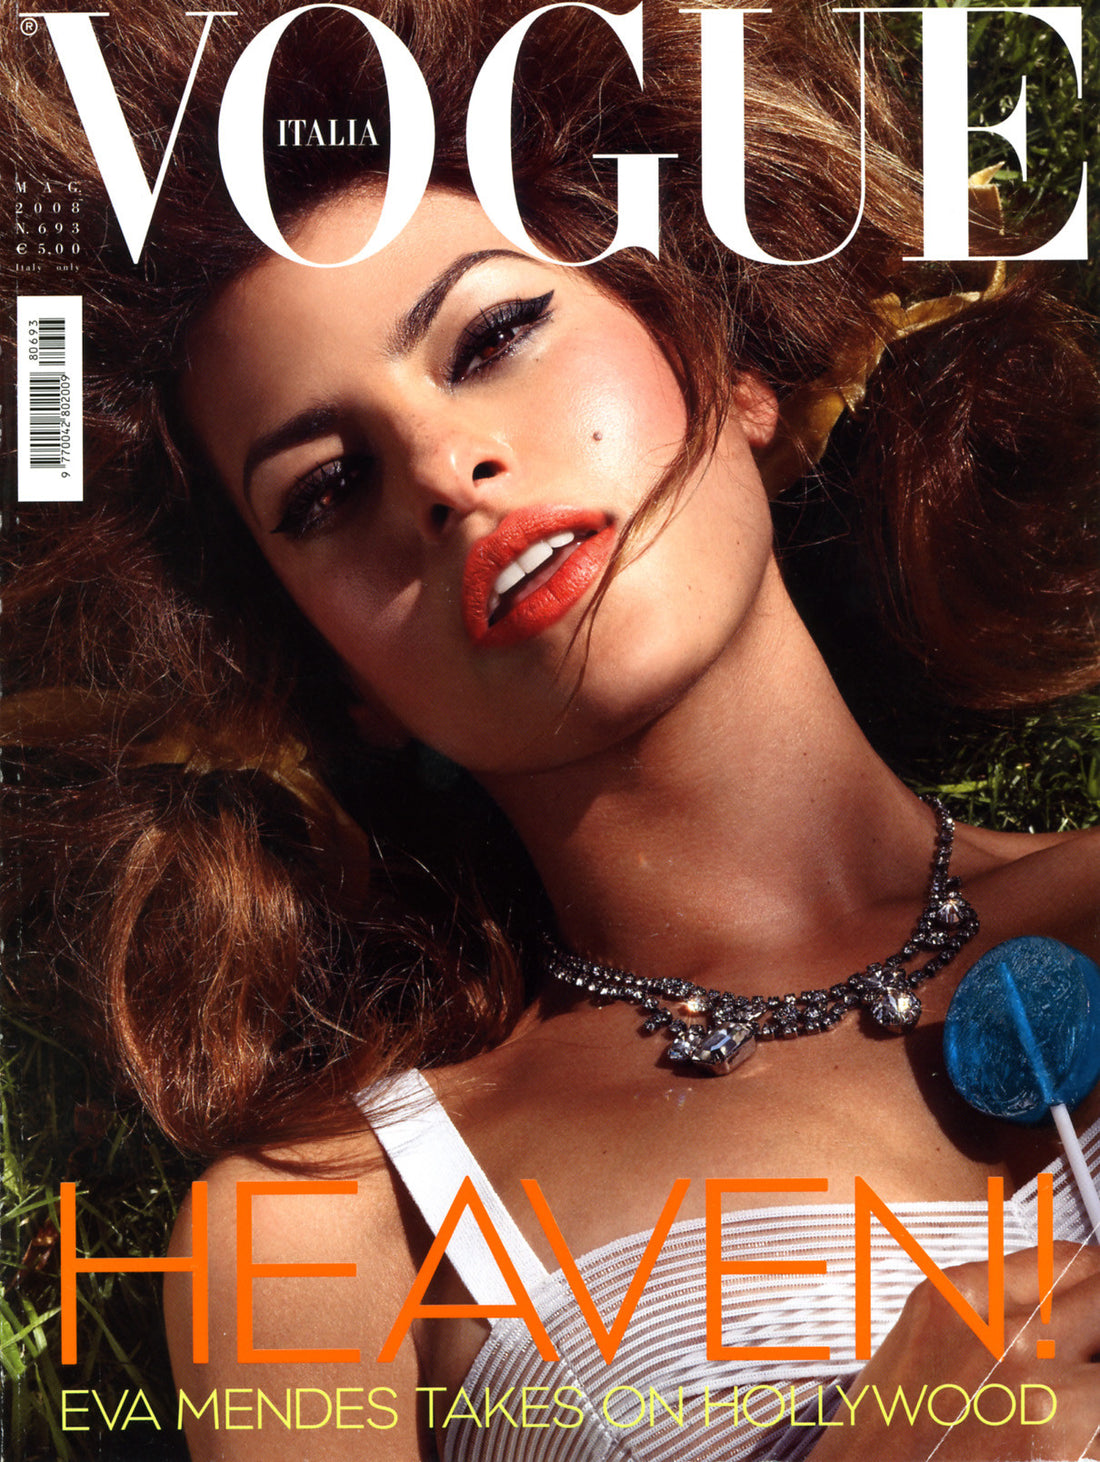 Vogue Italia - May 2008